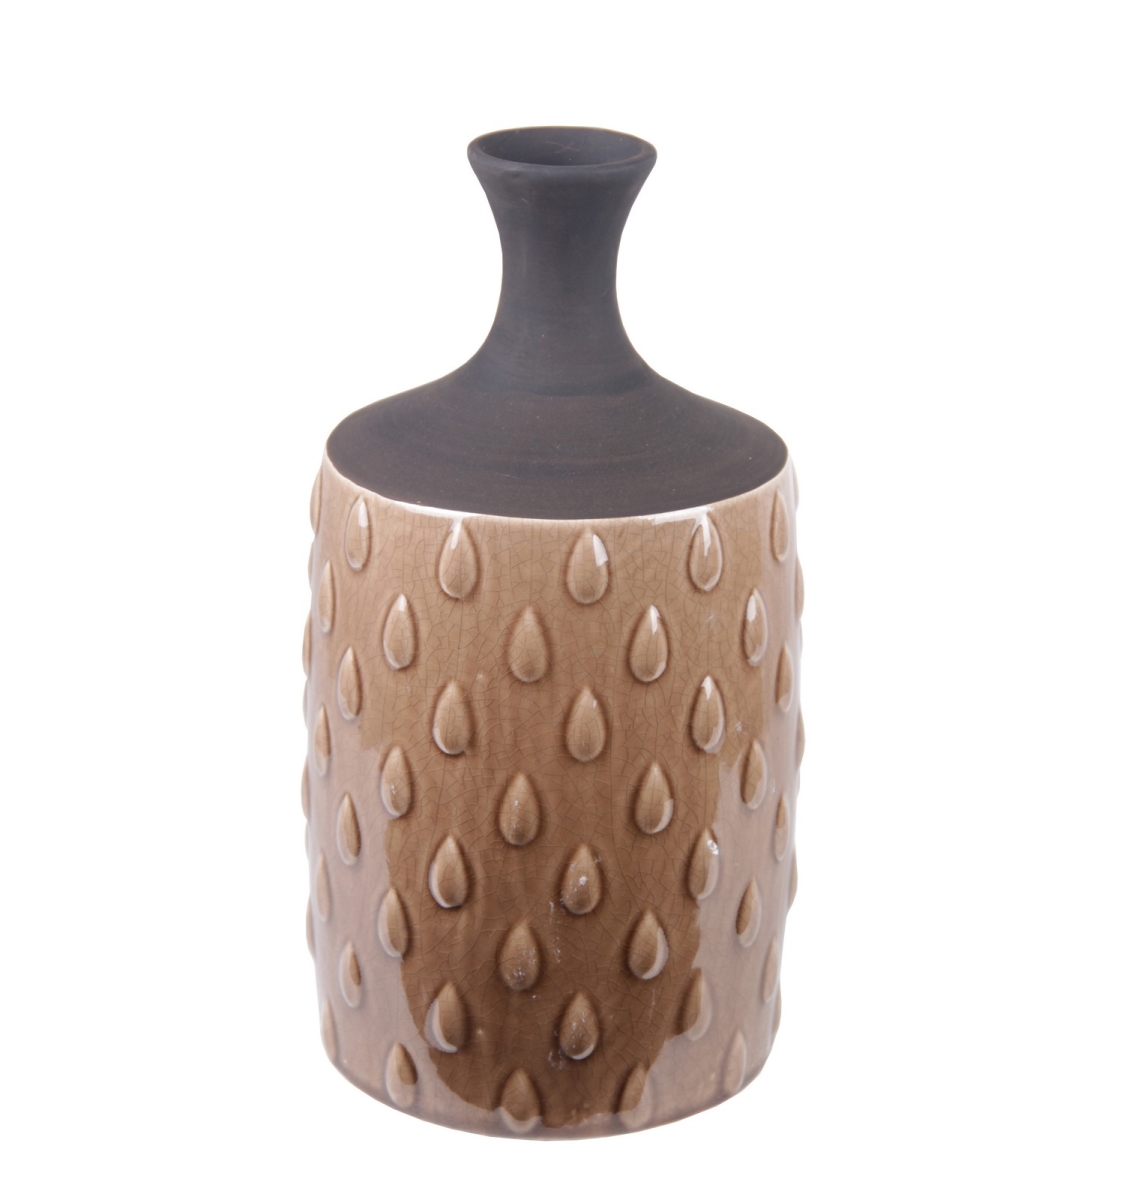 8.5 X 8.5 X 15 In. Water Drop Ceramic Vase